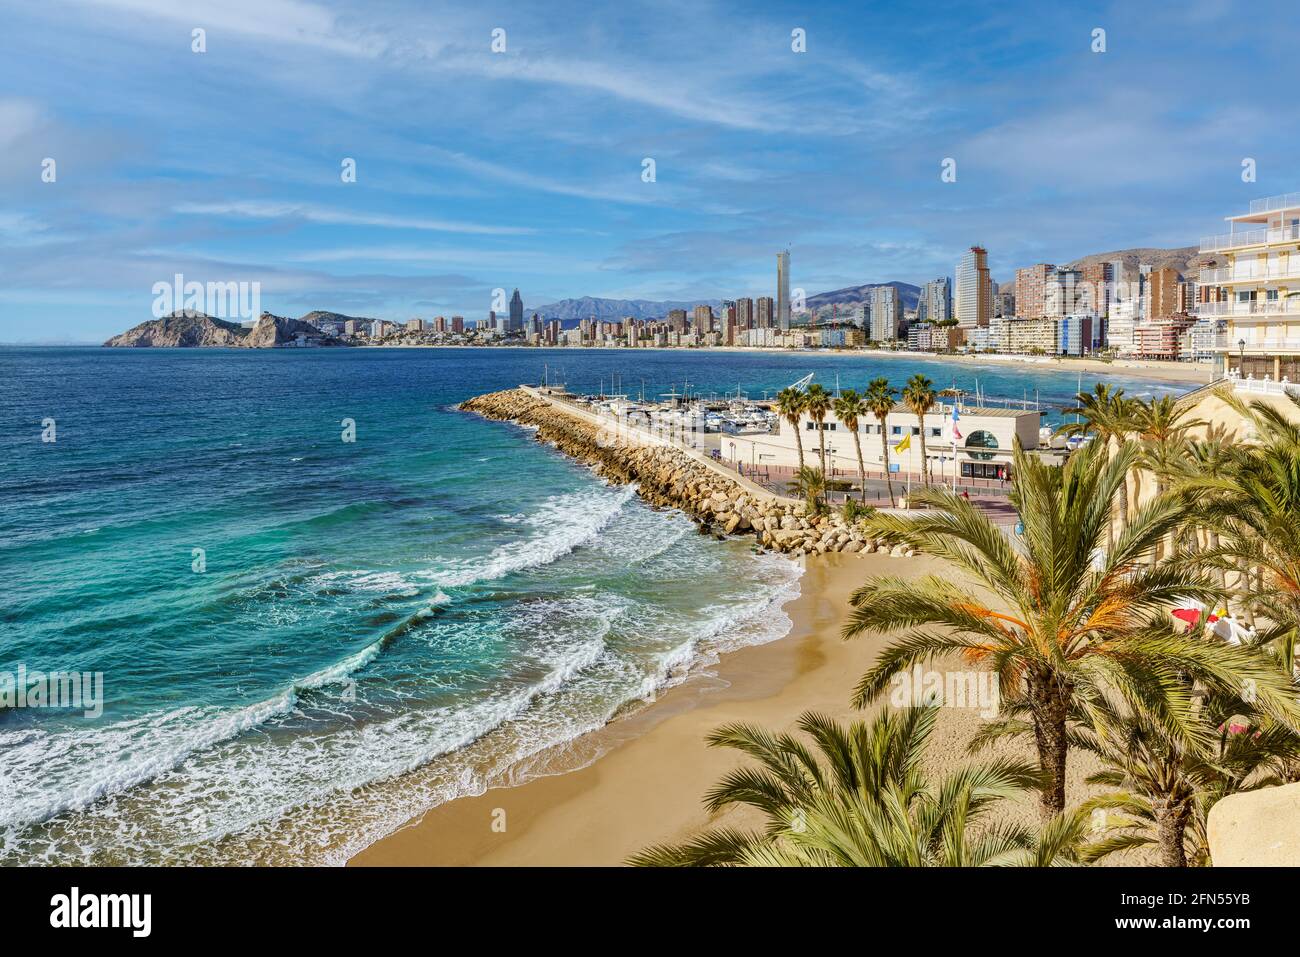 Panoramic view of the Playa de Poniente in Benidorm, famous resort city in the Mediterranean coast of Spain Stock Photo